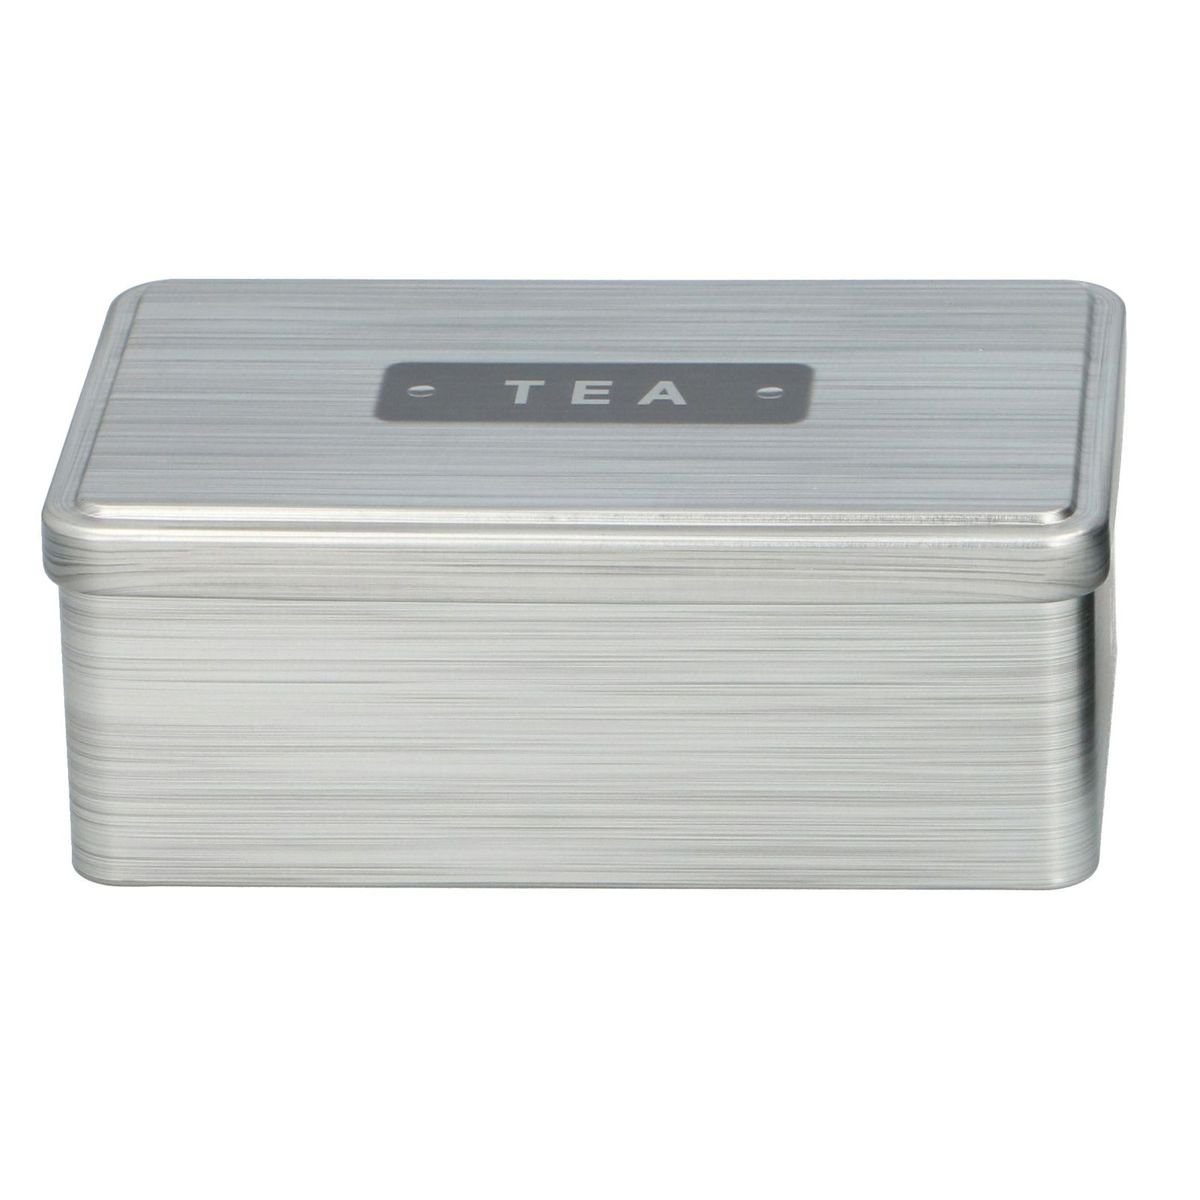 "TEA", Marabellas Aufbewahrungsbox Shop Blech 18x11x7 Teebox mit Teebox cm aus Silber Metall Aufdruck